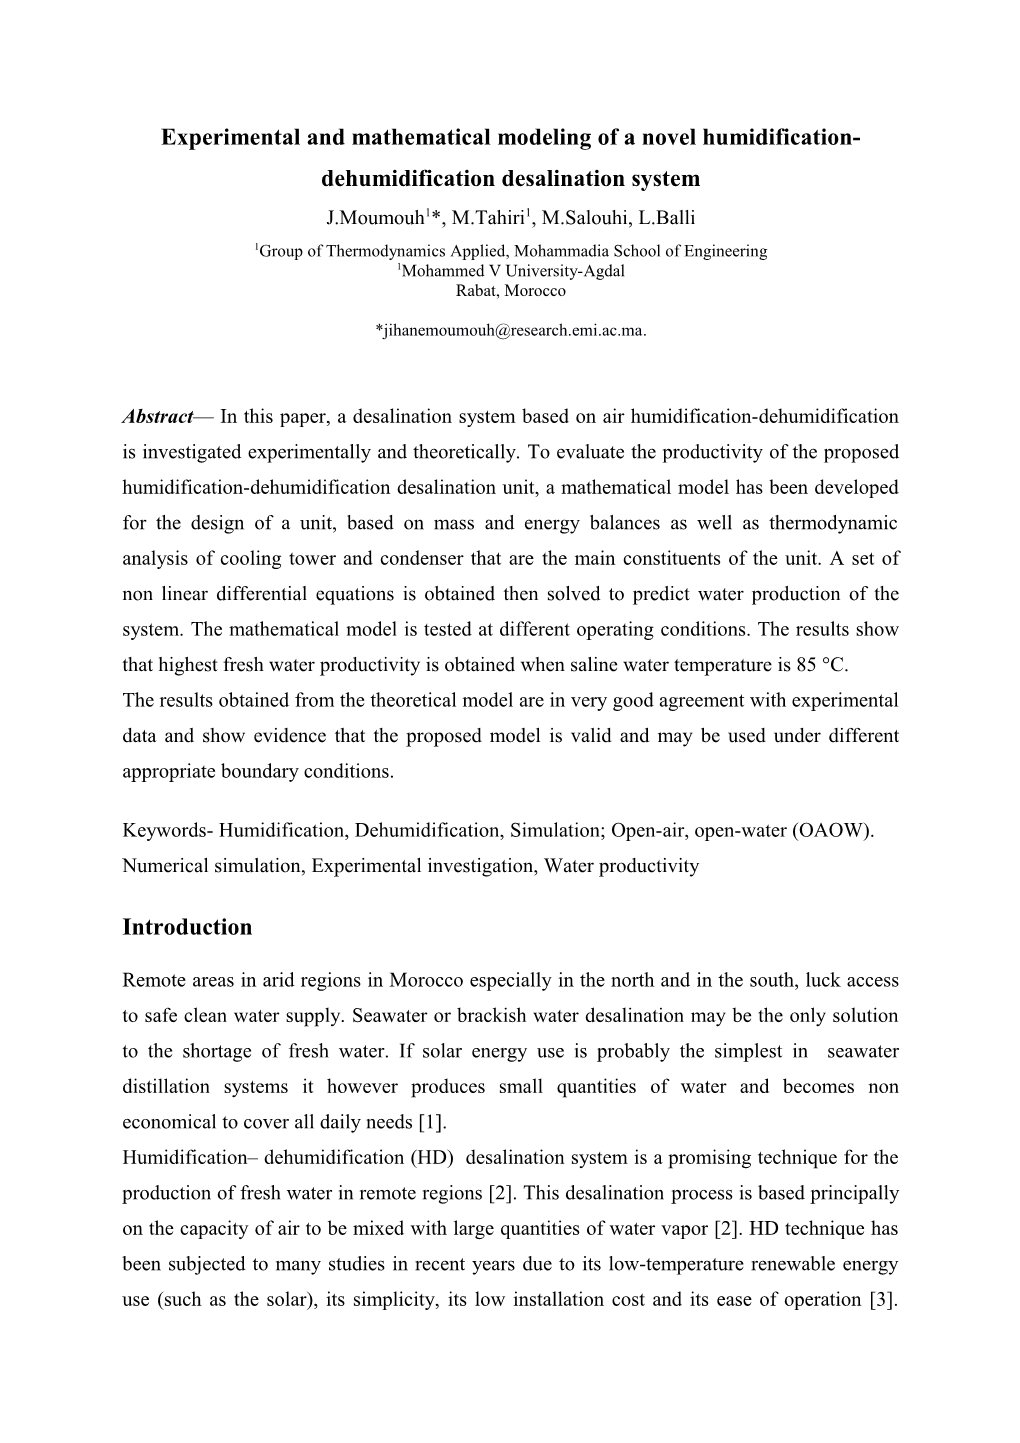 Experimental and Mathematical Modeling of a Novel Humidification-Dehumidification Desalination